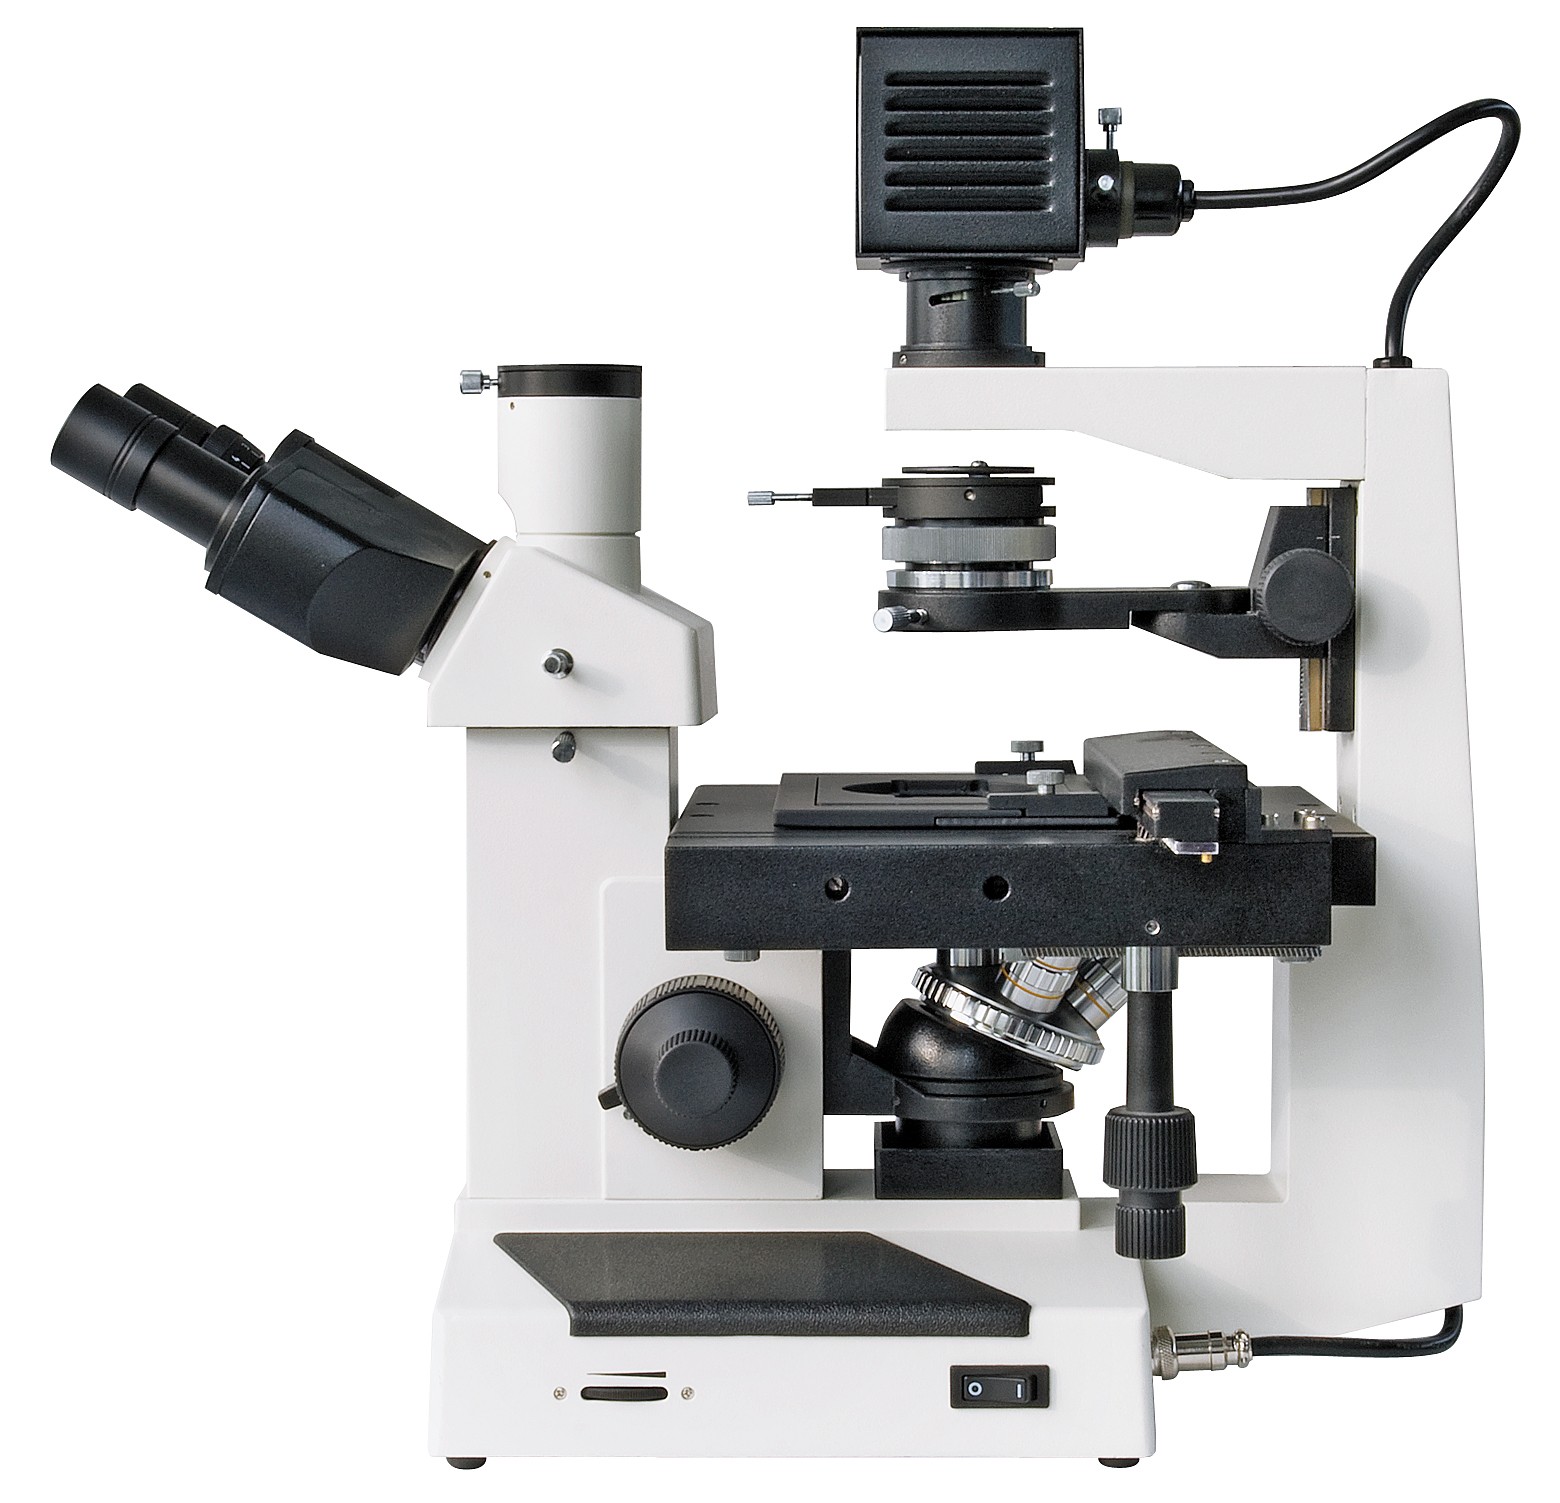 BRESSER Science IVM 401 Mikroskop